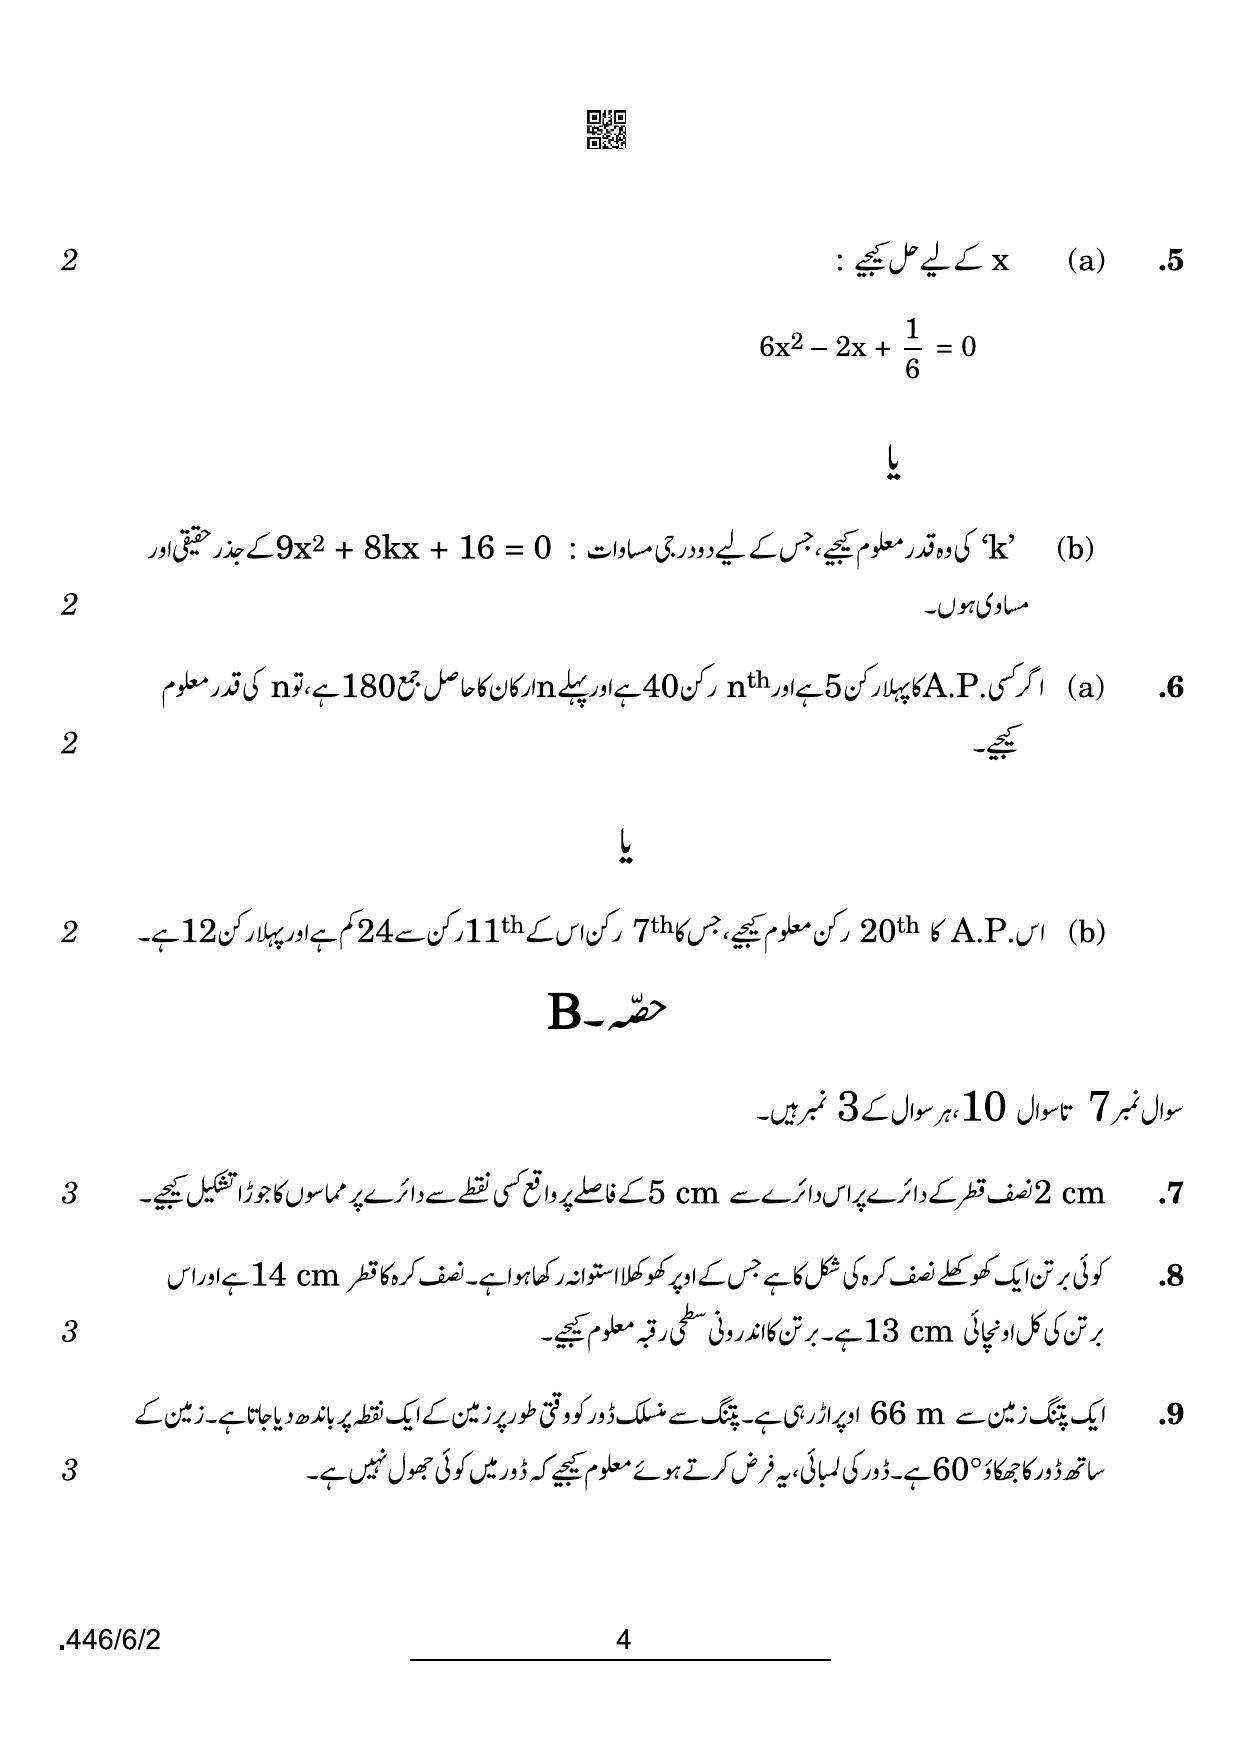 CBSE Class 10 446-6-2 Maths Basic Urdu 2022 Compartment Question Paper - Page 4